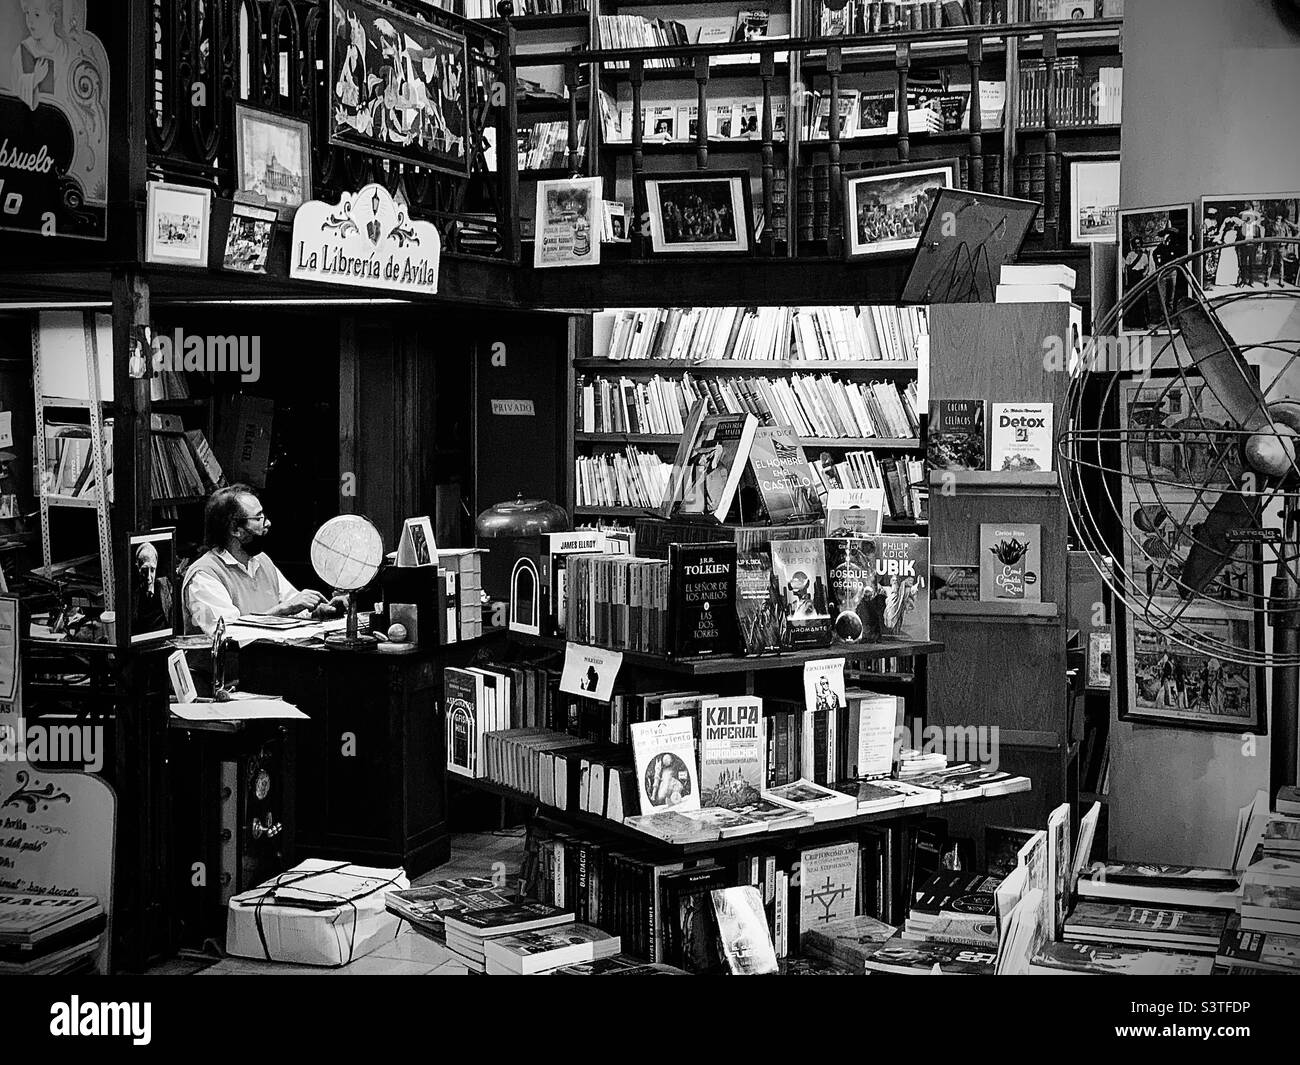 Man at the bookshelf in Argentina Stock Photo